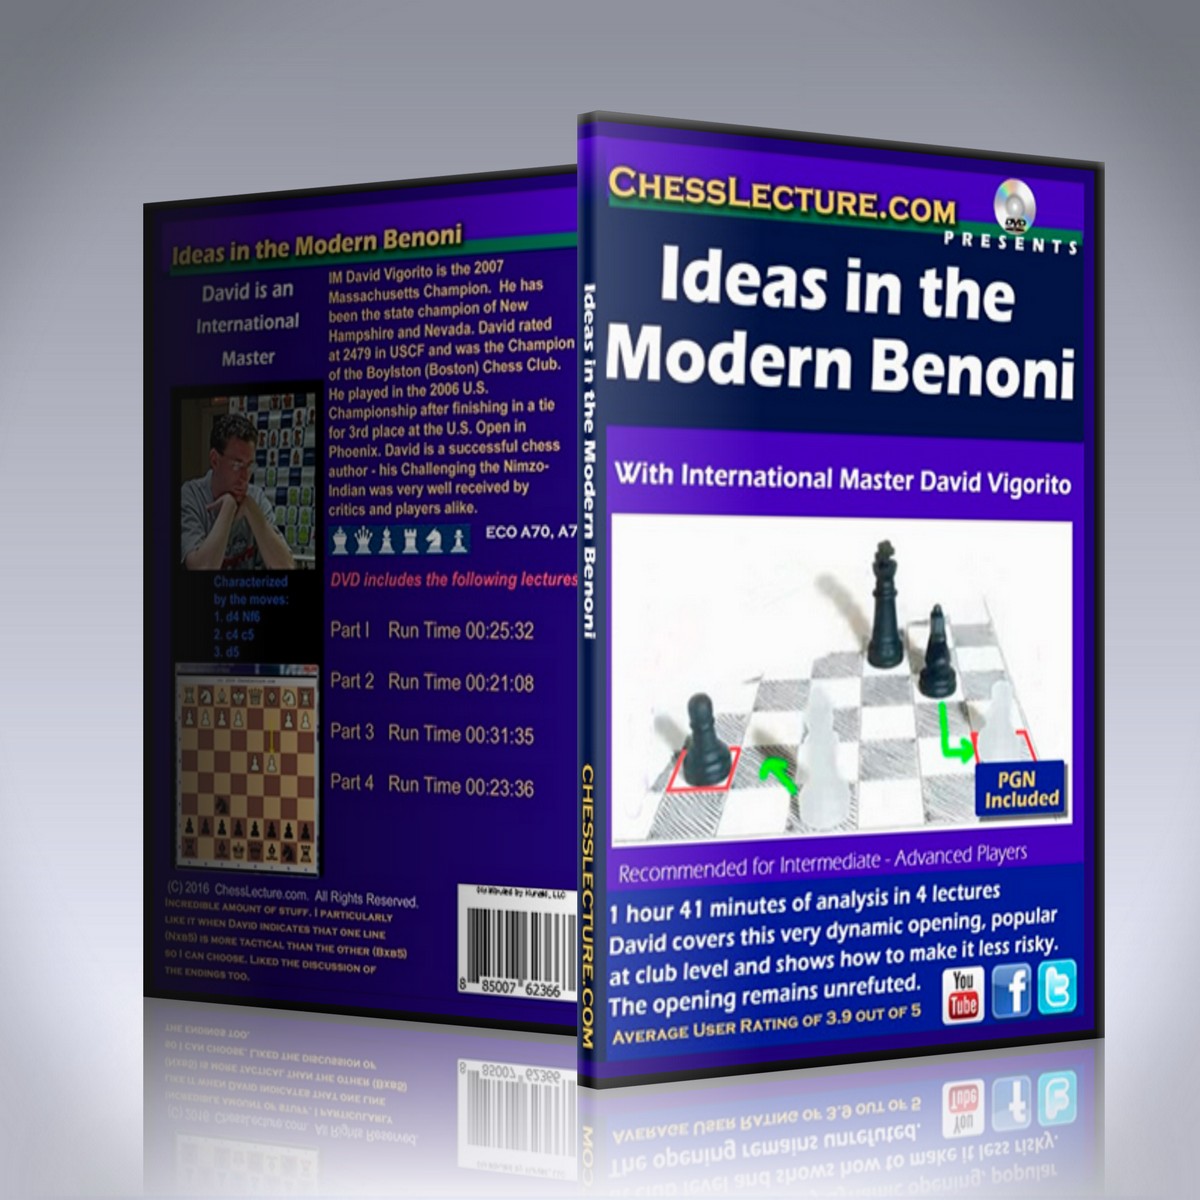 Ideas in the Modern Benoni – IM David Vigorito